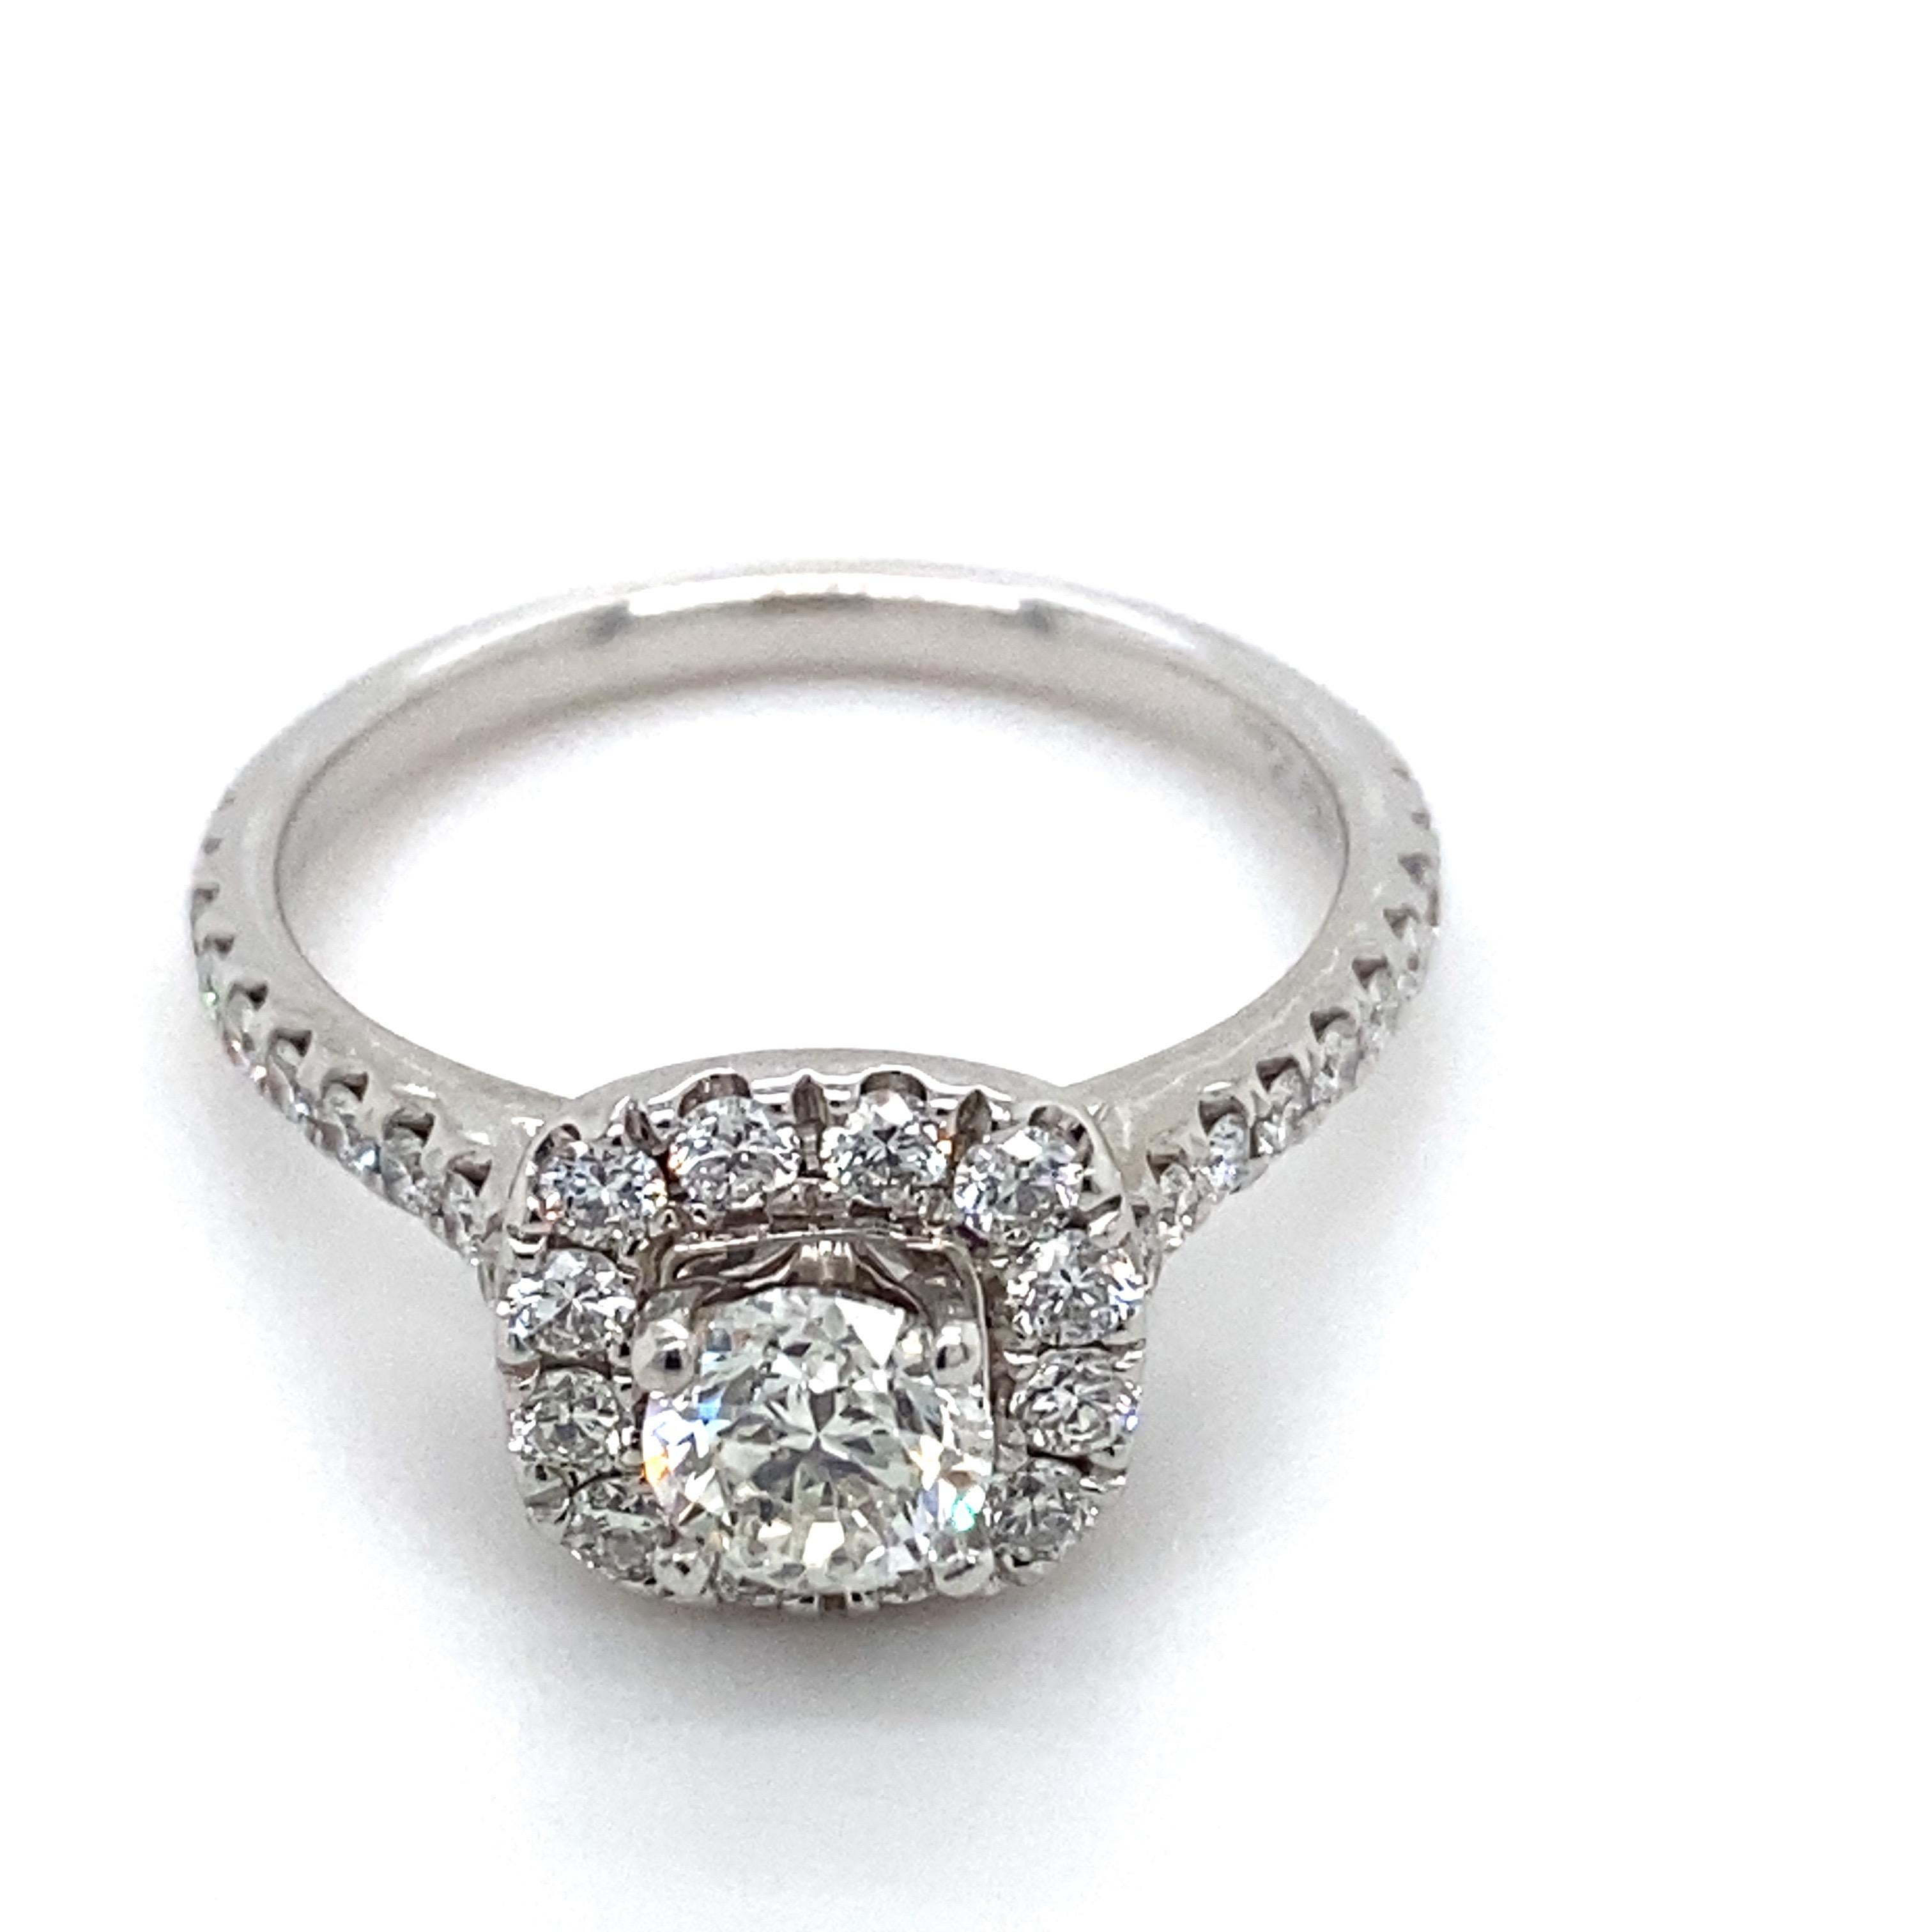 NEIL LANE Round Diamond Halo 1.27 tcw Engagement Ring in 14kt White Gold 2